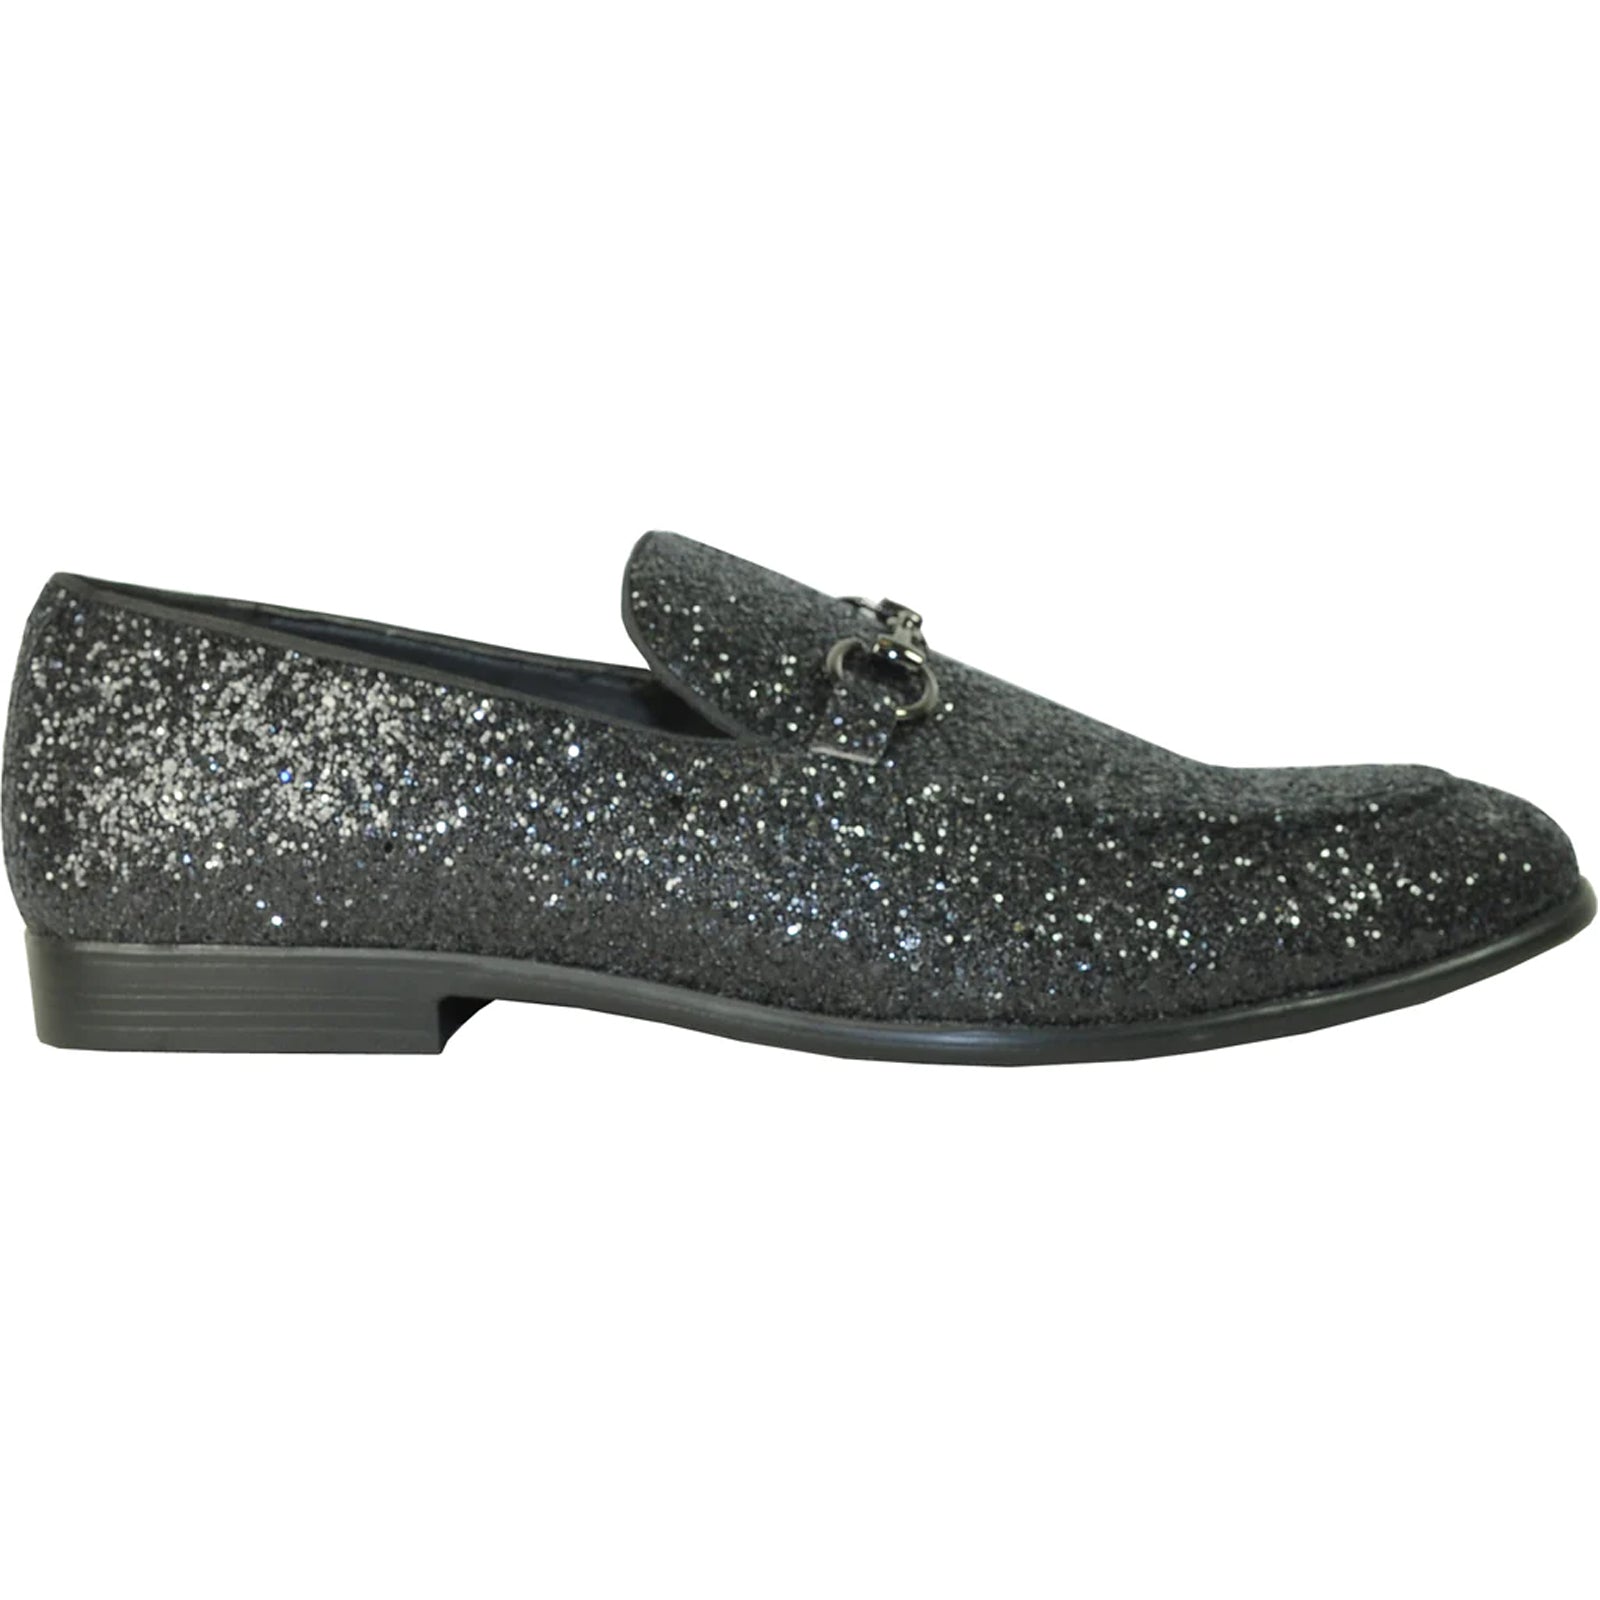 "Black Sequin Prom Tuxedo Loafer - Modern Men's Glitter Footwear"